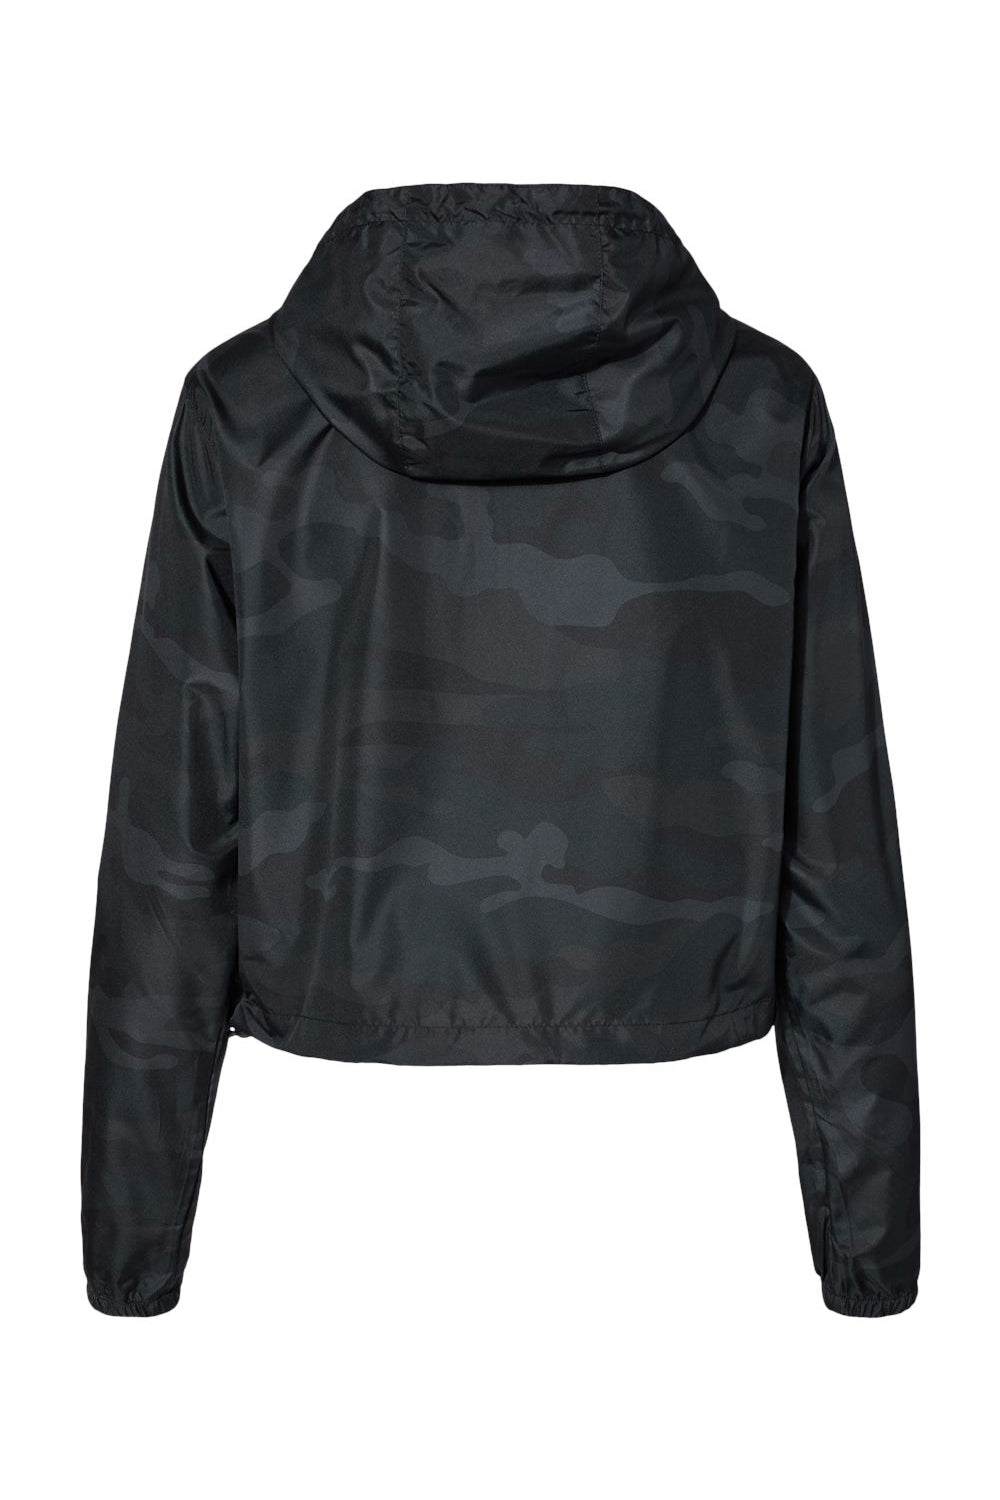 Independent Trading Co. EXP64CRP Womens 1/4 Zip Crop Hooded Windbreaker Jacket Black Camo Flat Back